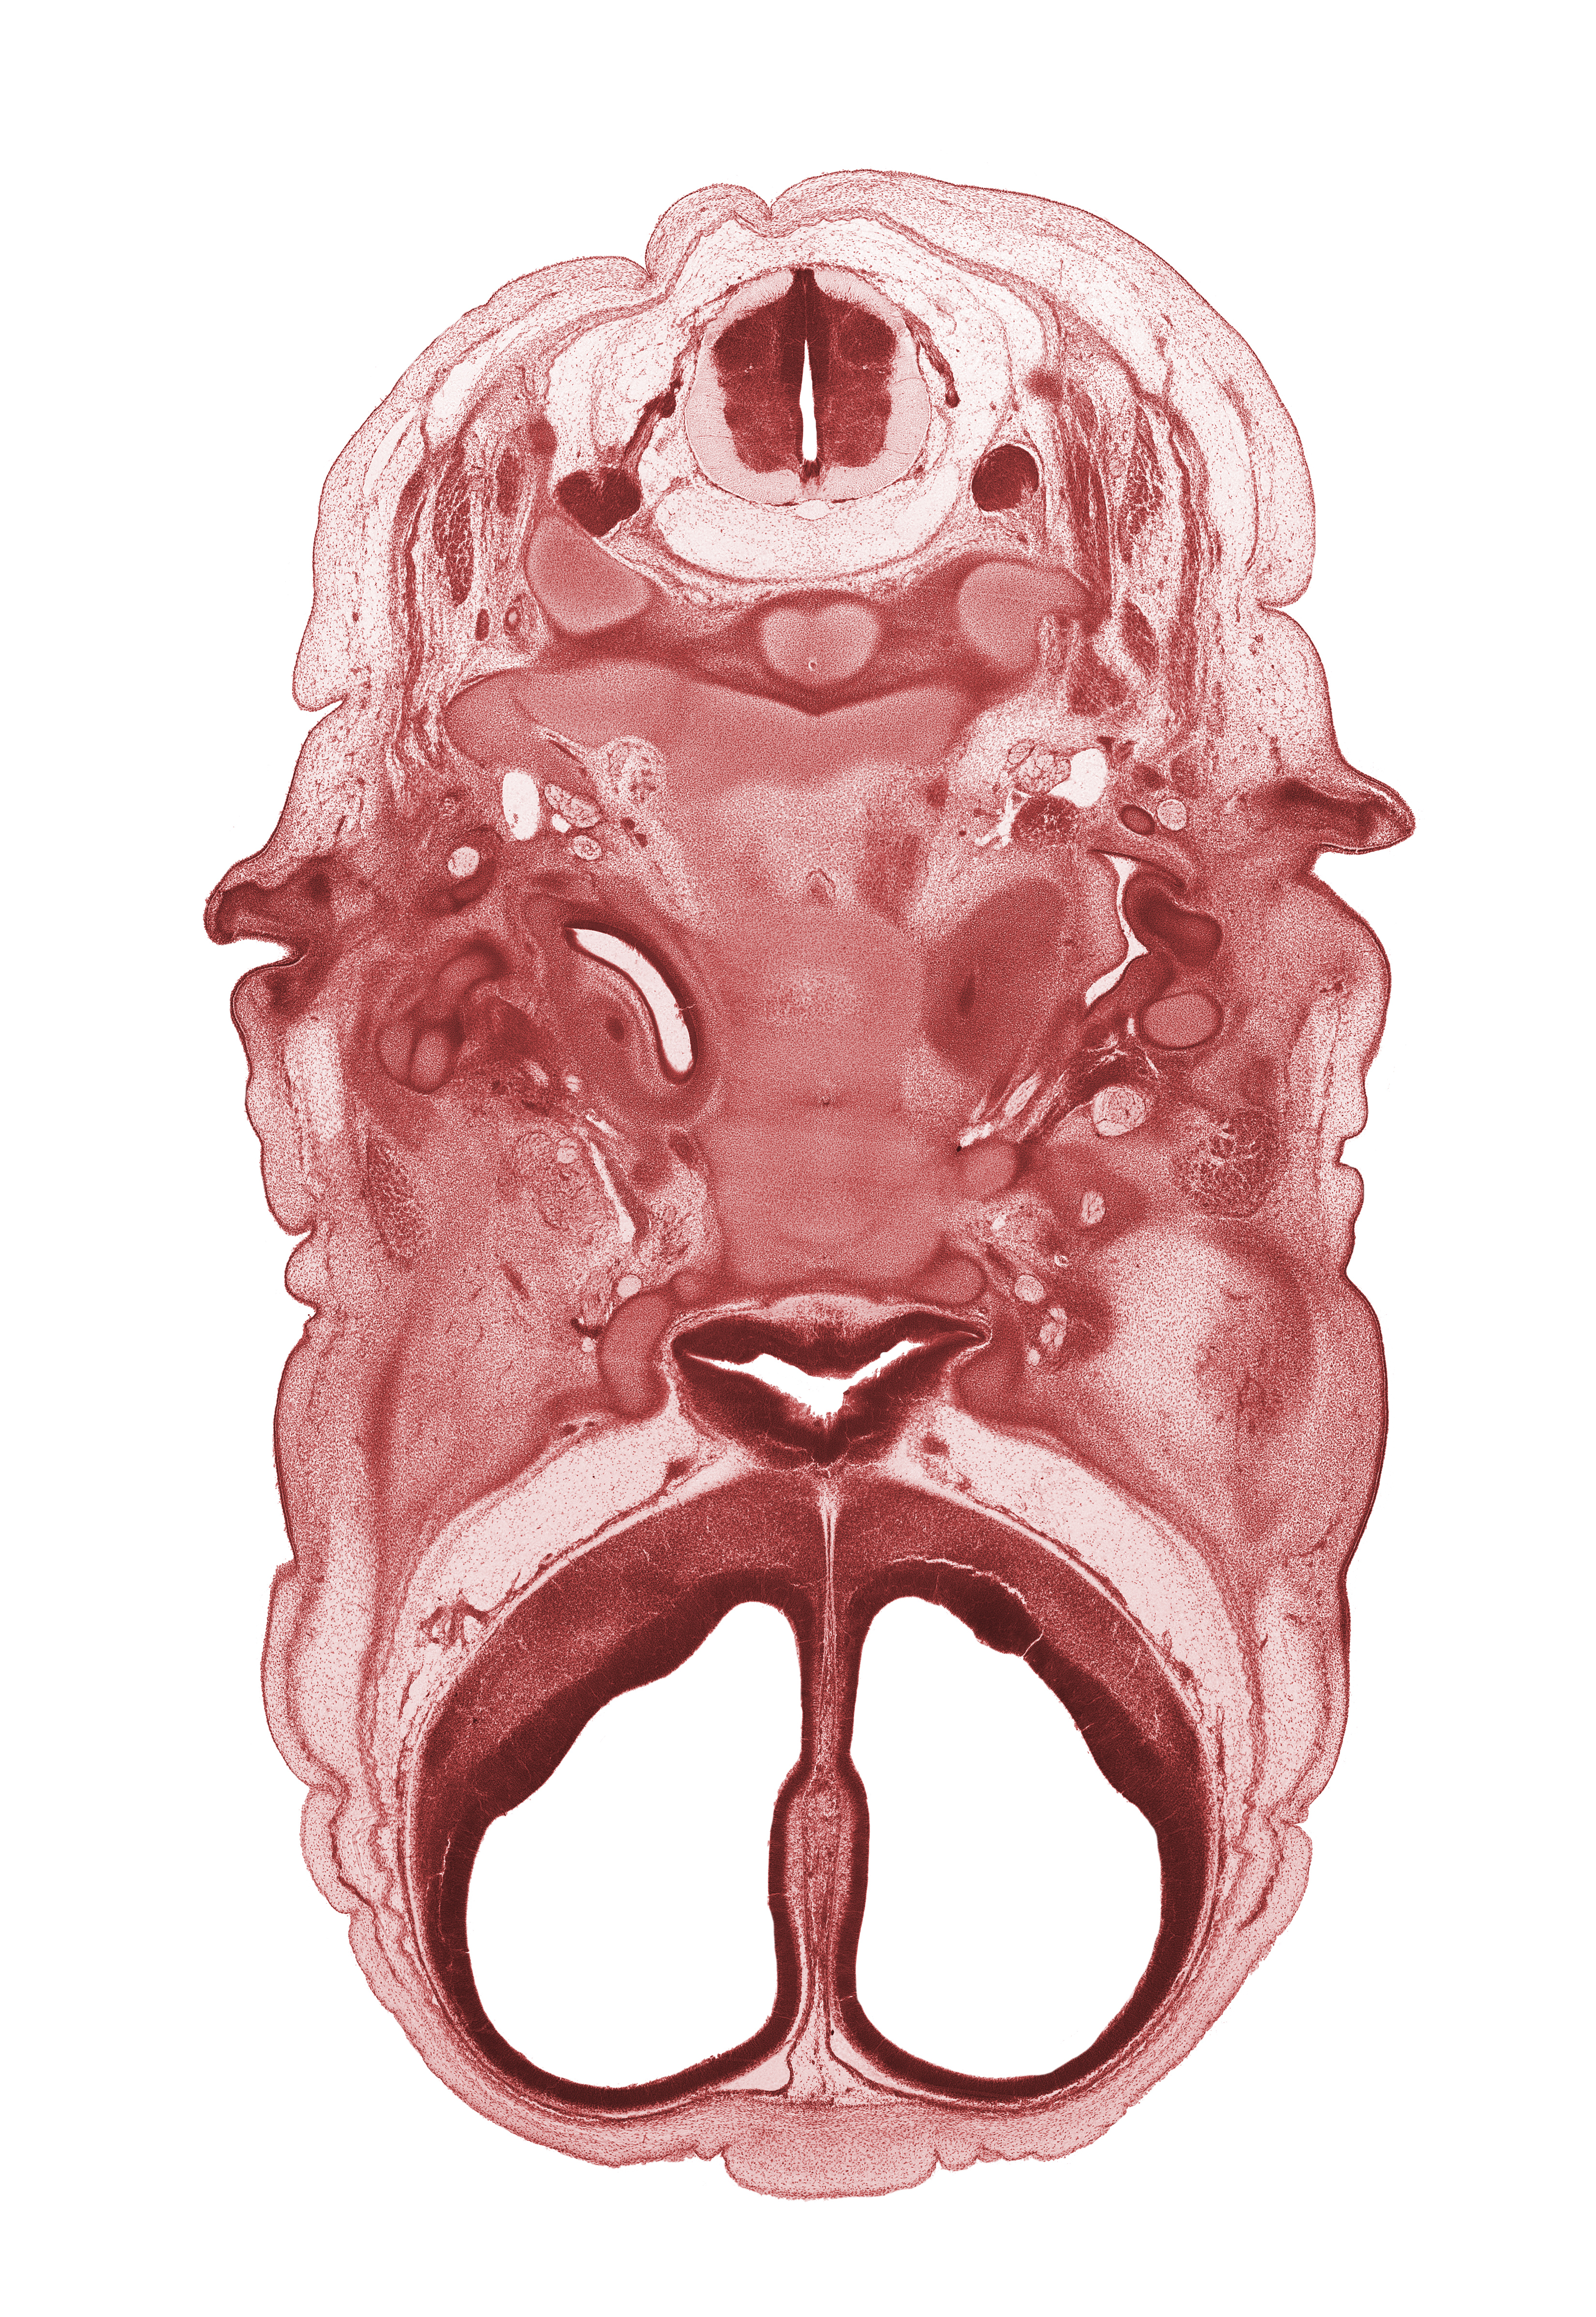 C-2 spinal ganglion, C-2 spinal nerve, alisphenoid, anterior cerebral artery, auricle, body of sphenoid, dens of C-2 vertebra (axis), edge of eyeball, facial nerve (CN VII), frontalis muscle, internal carotid artery, notochord, optic groove, orbitosphenoid, osteogenic layer, pharyngotympanic tube, pre-optic area, spinal accessory nerve (CN XI), subarachnoid space, vagus nerve (CN X), ventral arch of C-1 vertebra (atlas)